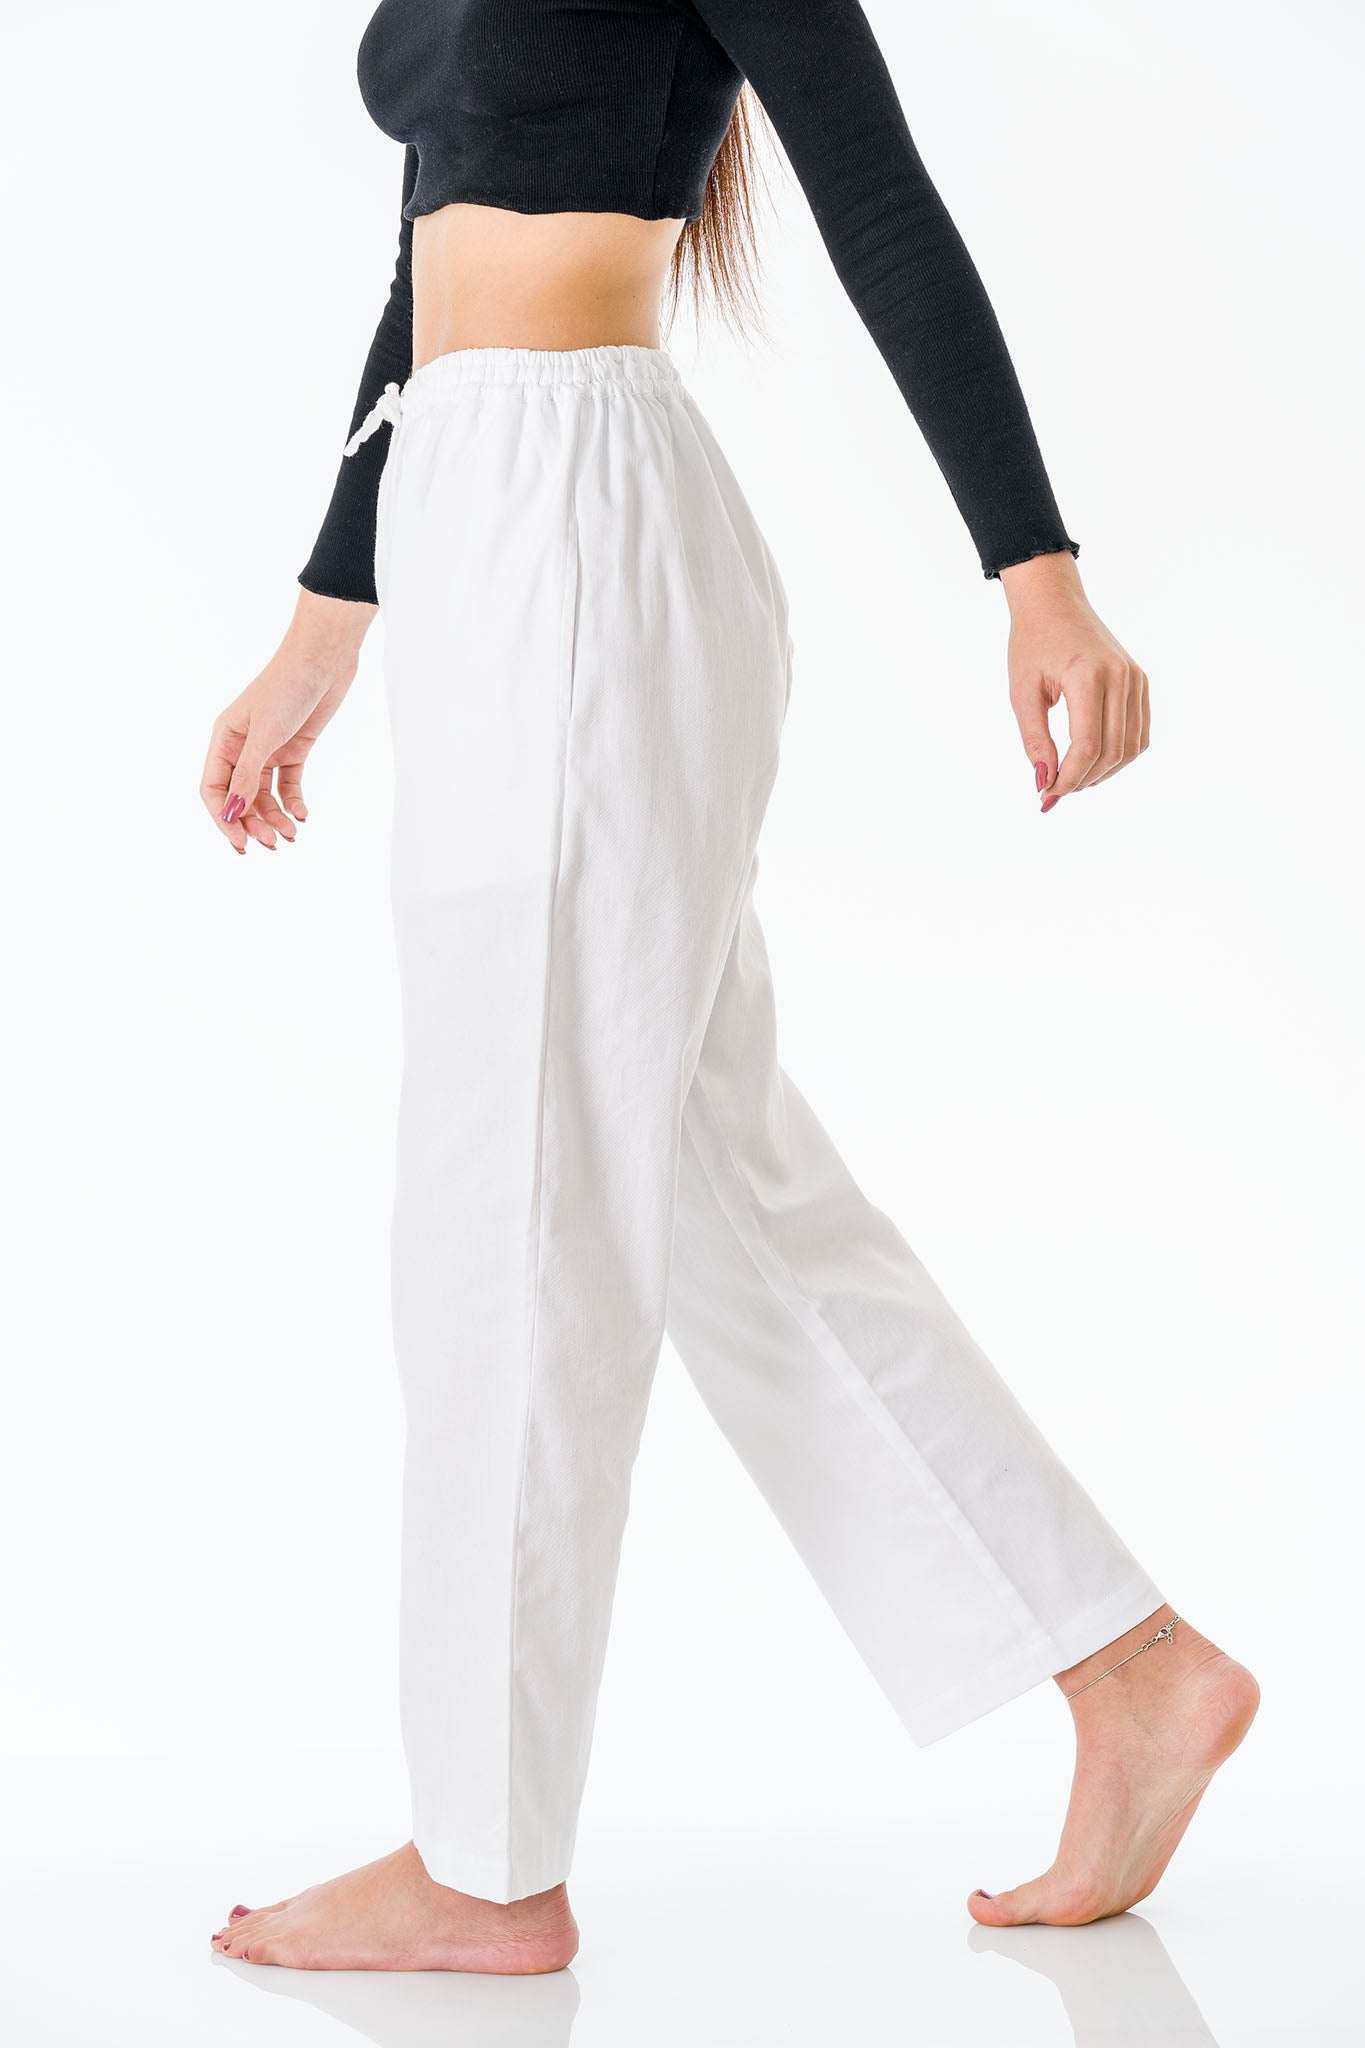 White cotton pants for women